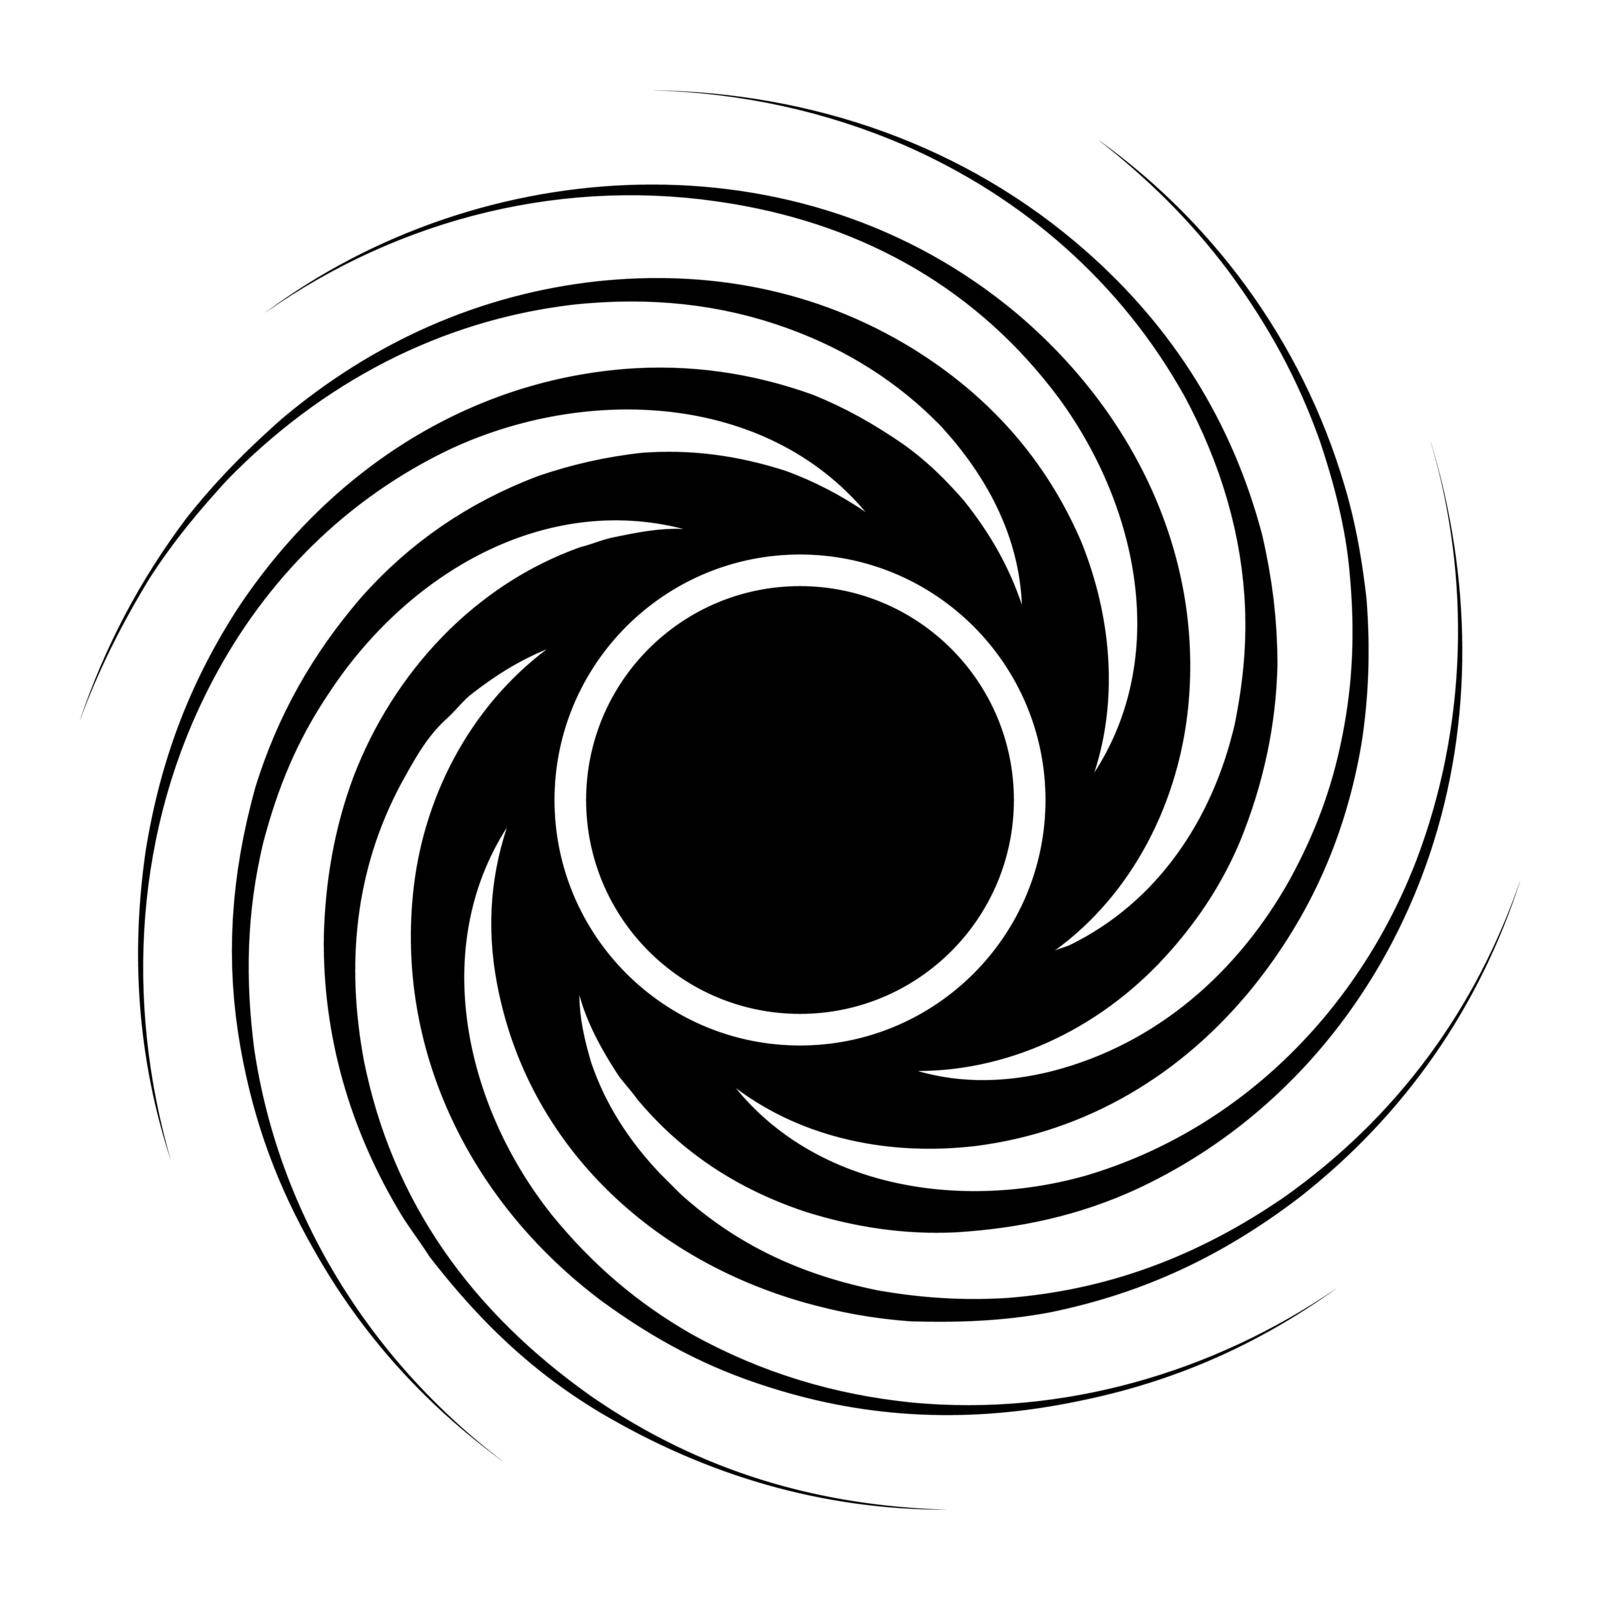 Black hole spiral shape vortex portal icon black color vector illustration flat style simple image